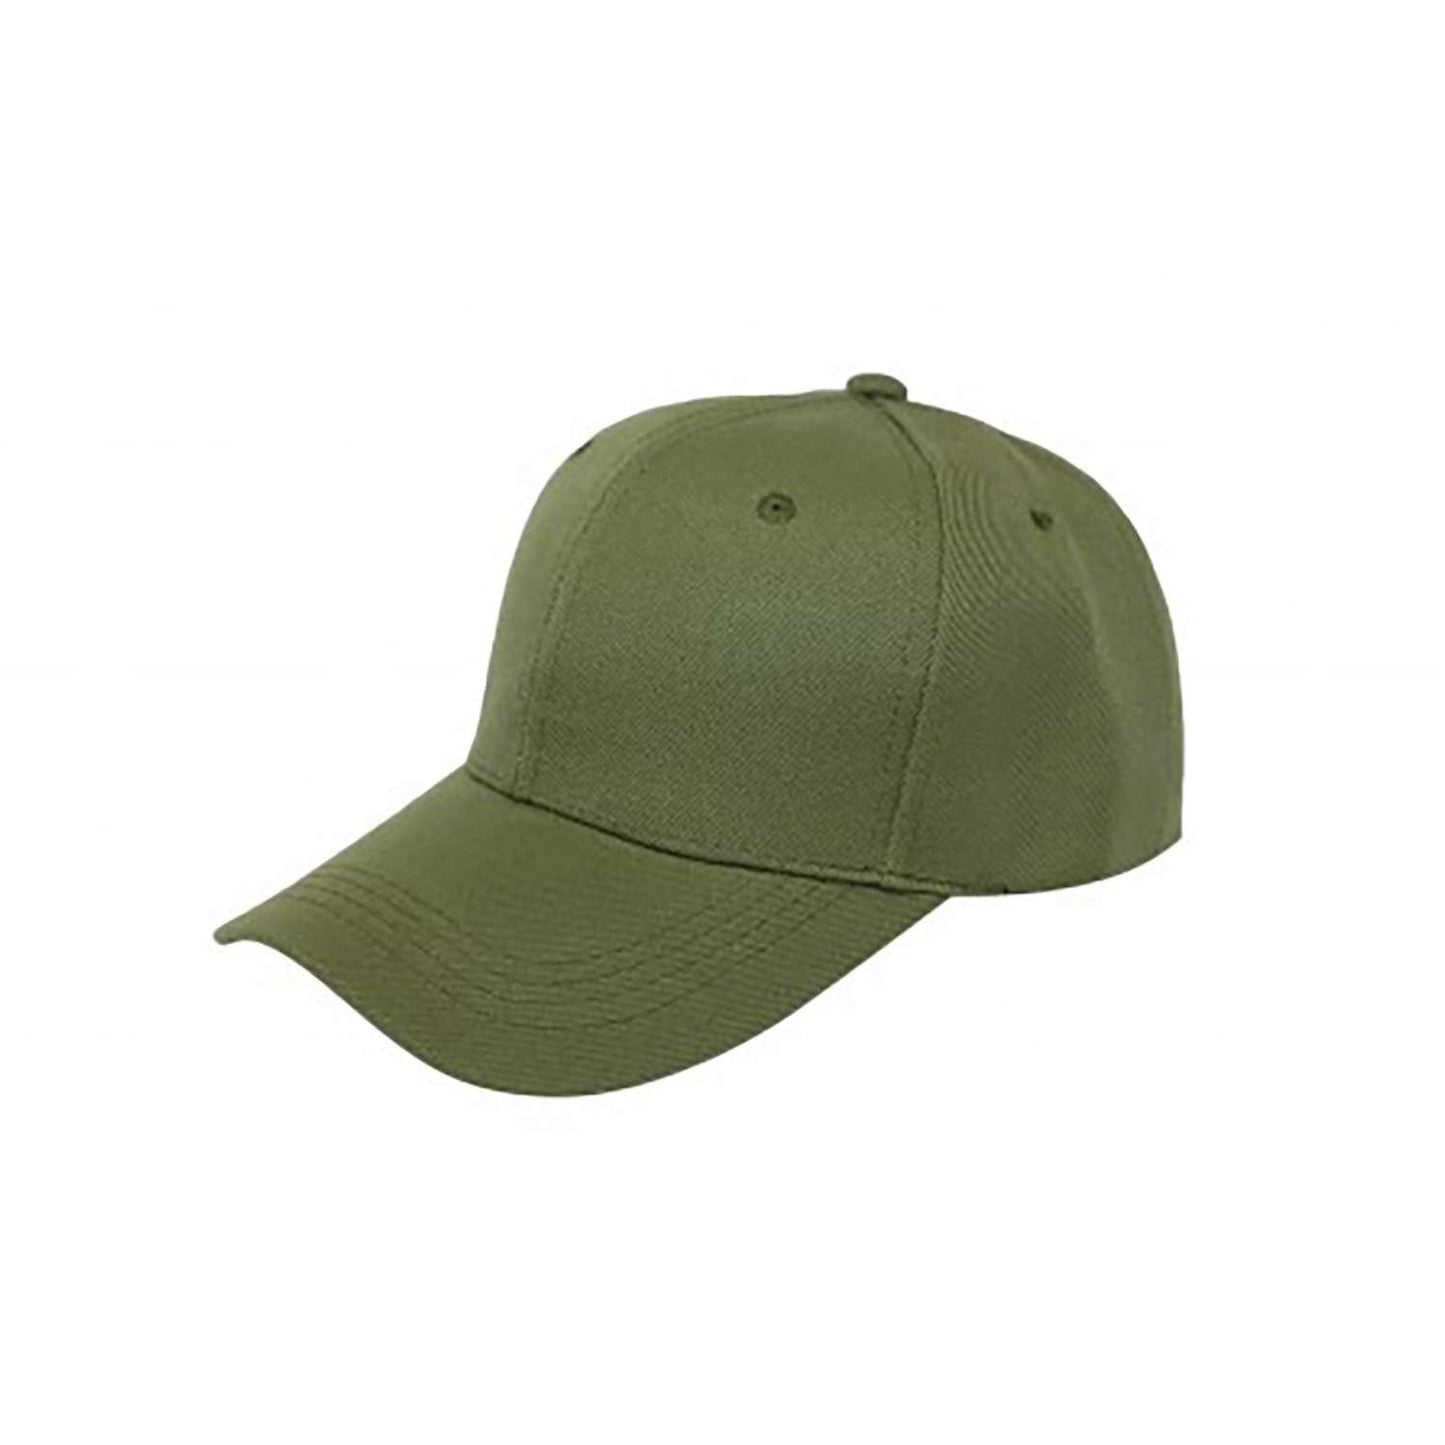 Pack of 5 Mechaly Plain Baseball Cap Hat Adjustable Back